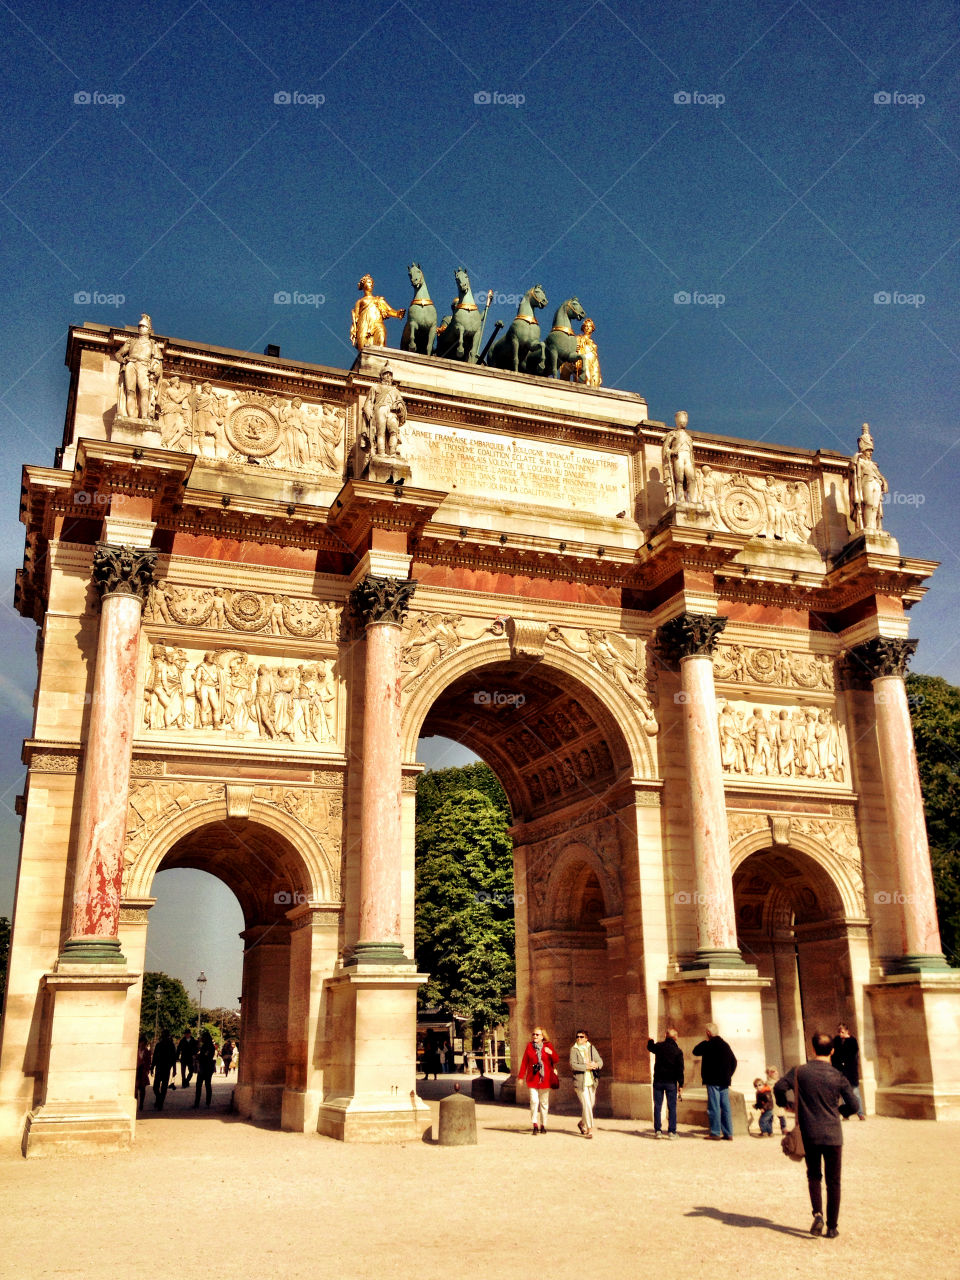 Arco de Triunfo del Carrusel. Arco de Triunfo del Carrusel (Paris - France)